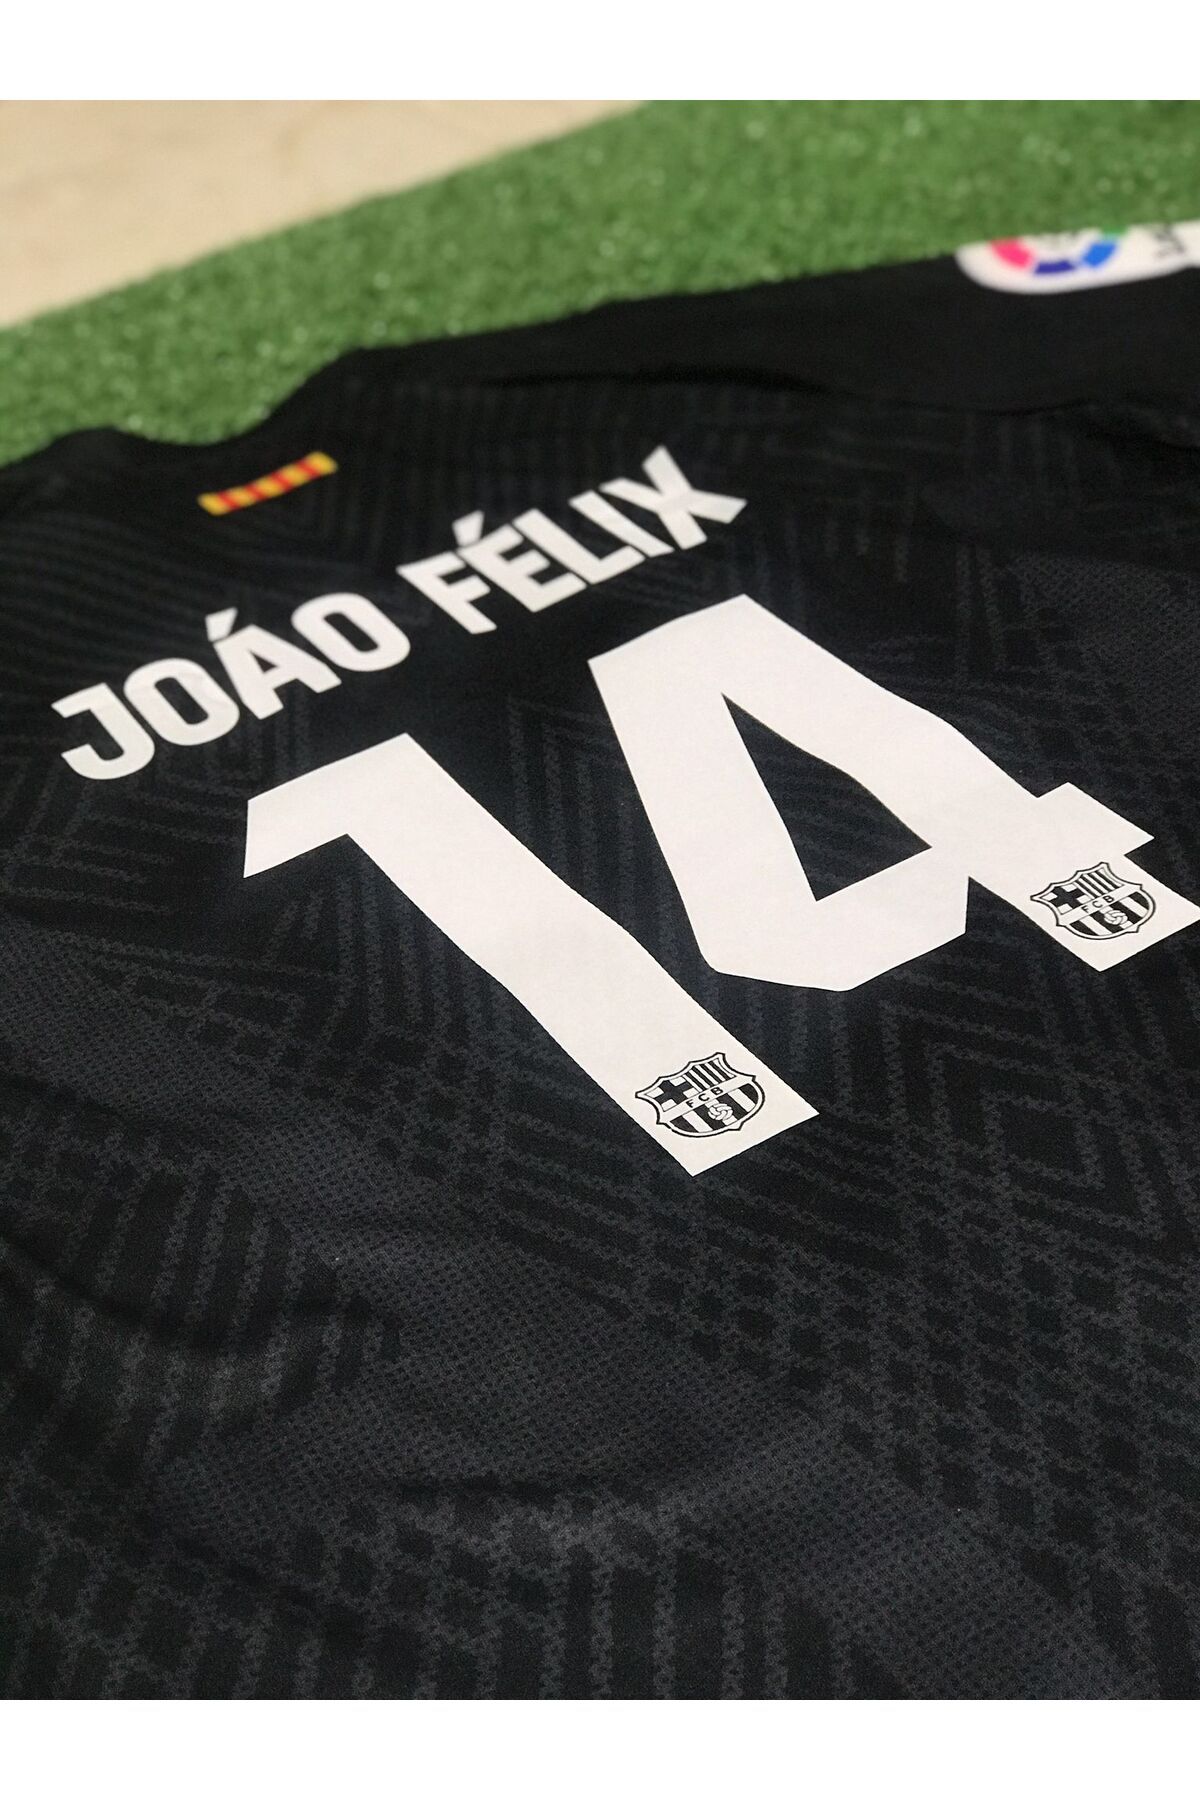 BYSPORTAKUS Barcelona 2023/24 Yeni Sezon Joâo Fèlix Konsept Forması (BLACK JERSEY)